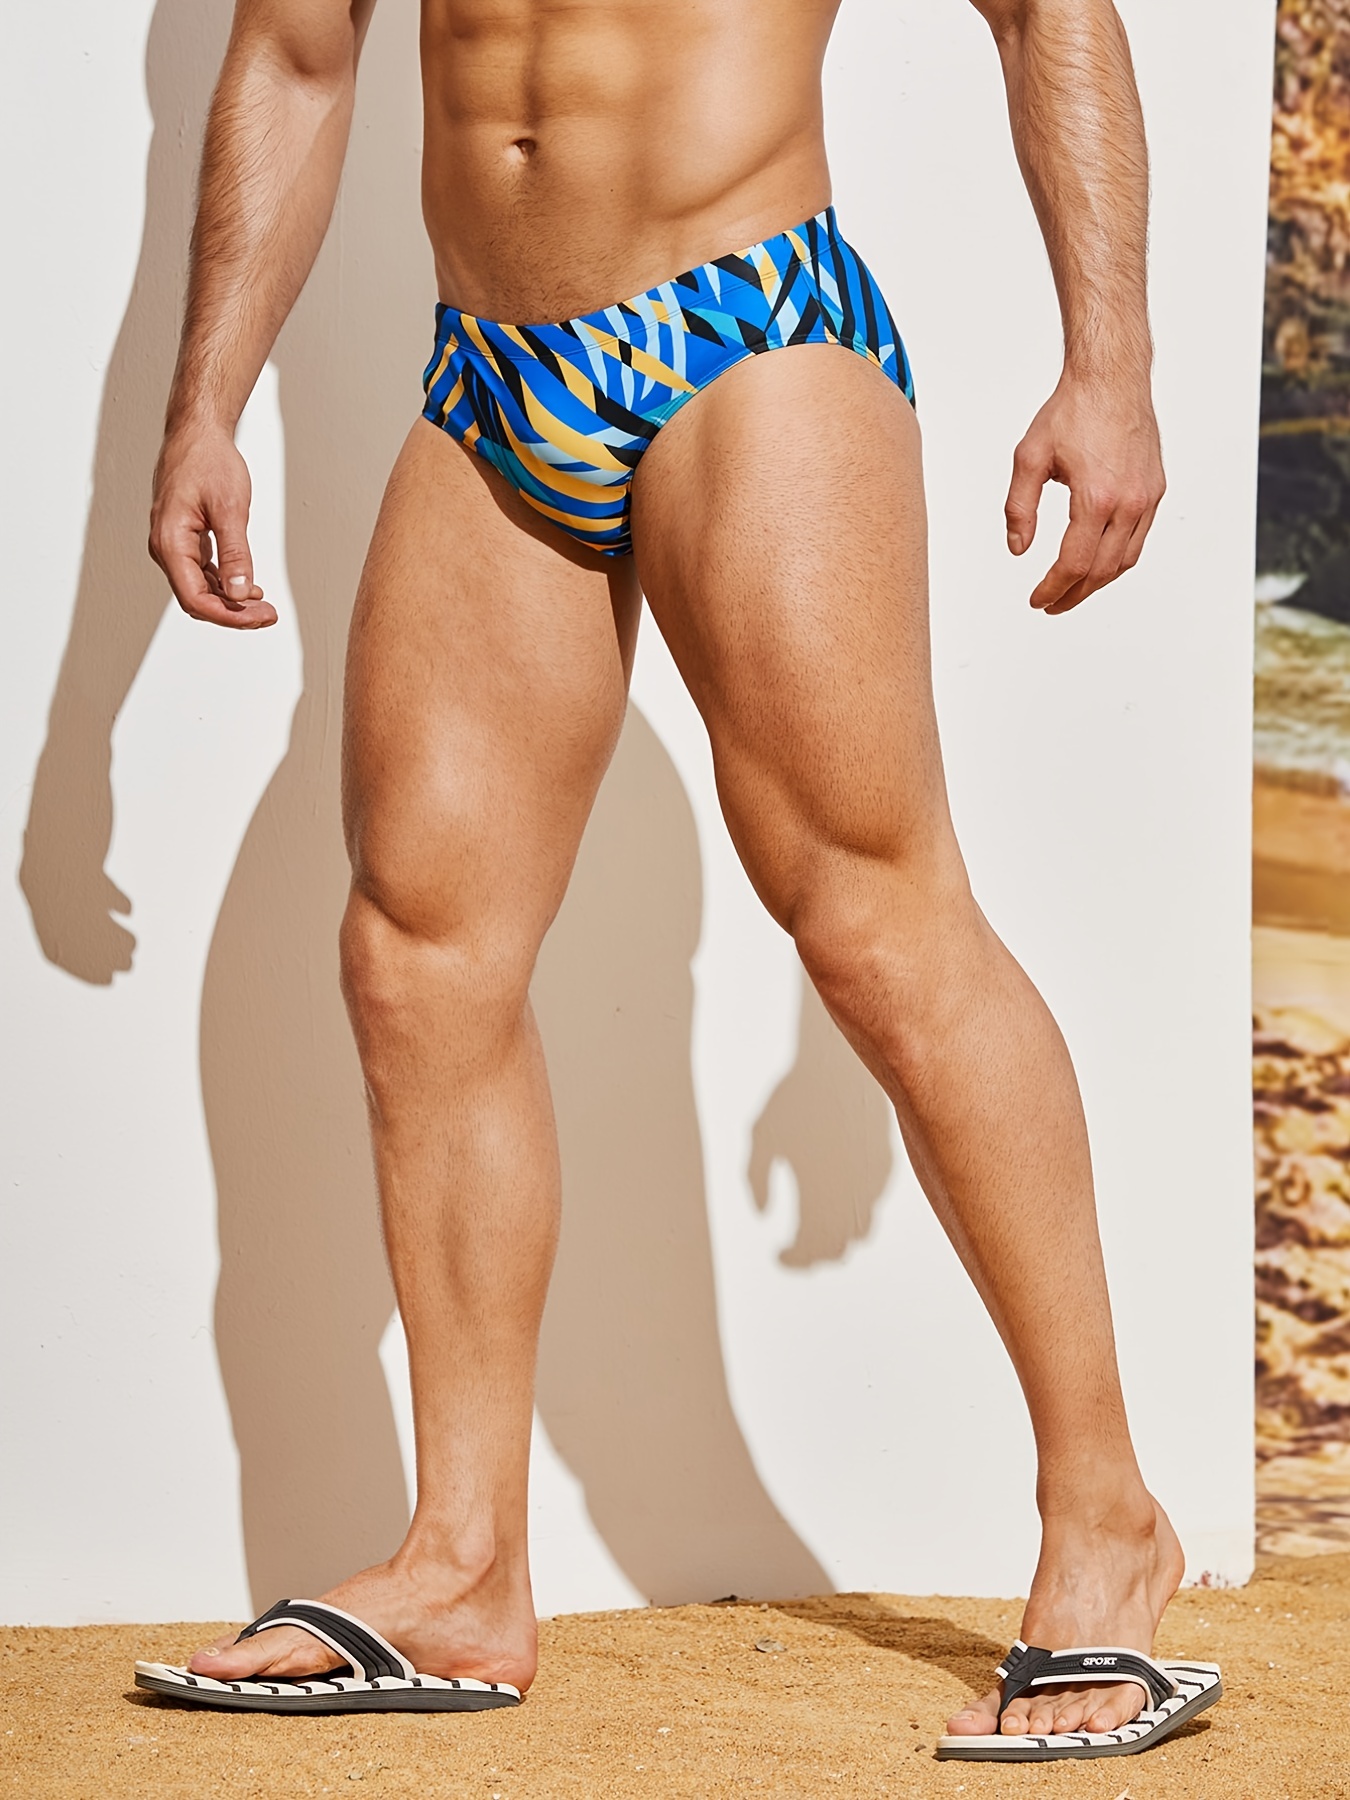 361 Men WaterProof Quick-Drying Surf Board Swim Shorts Bikini Boxer Briefs  Underwear Bathing Suit Running Beach Trunks